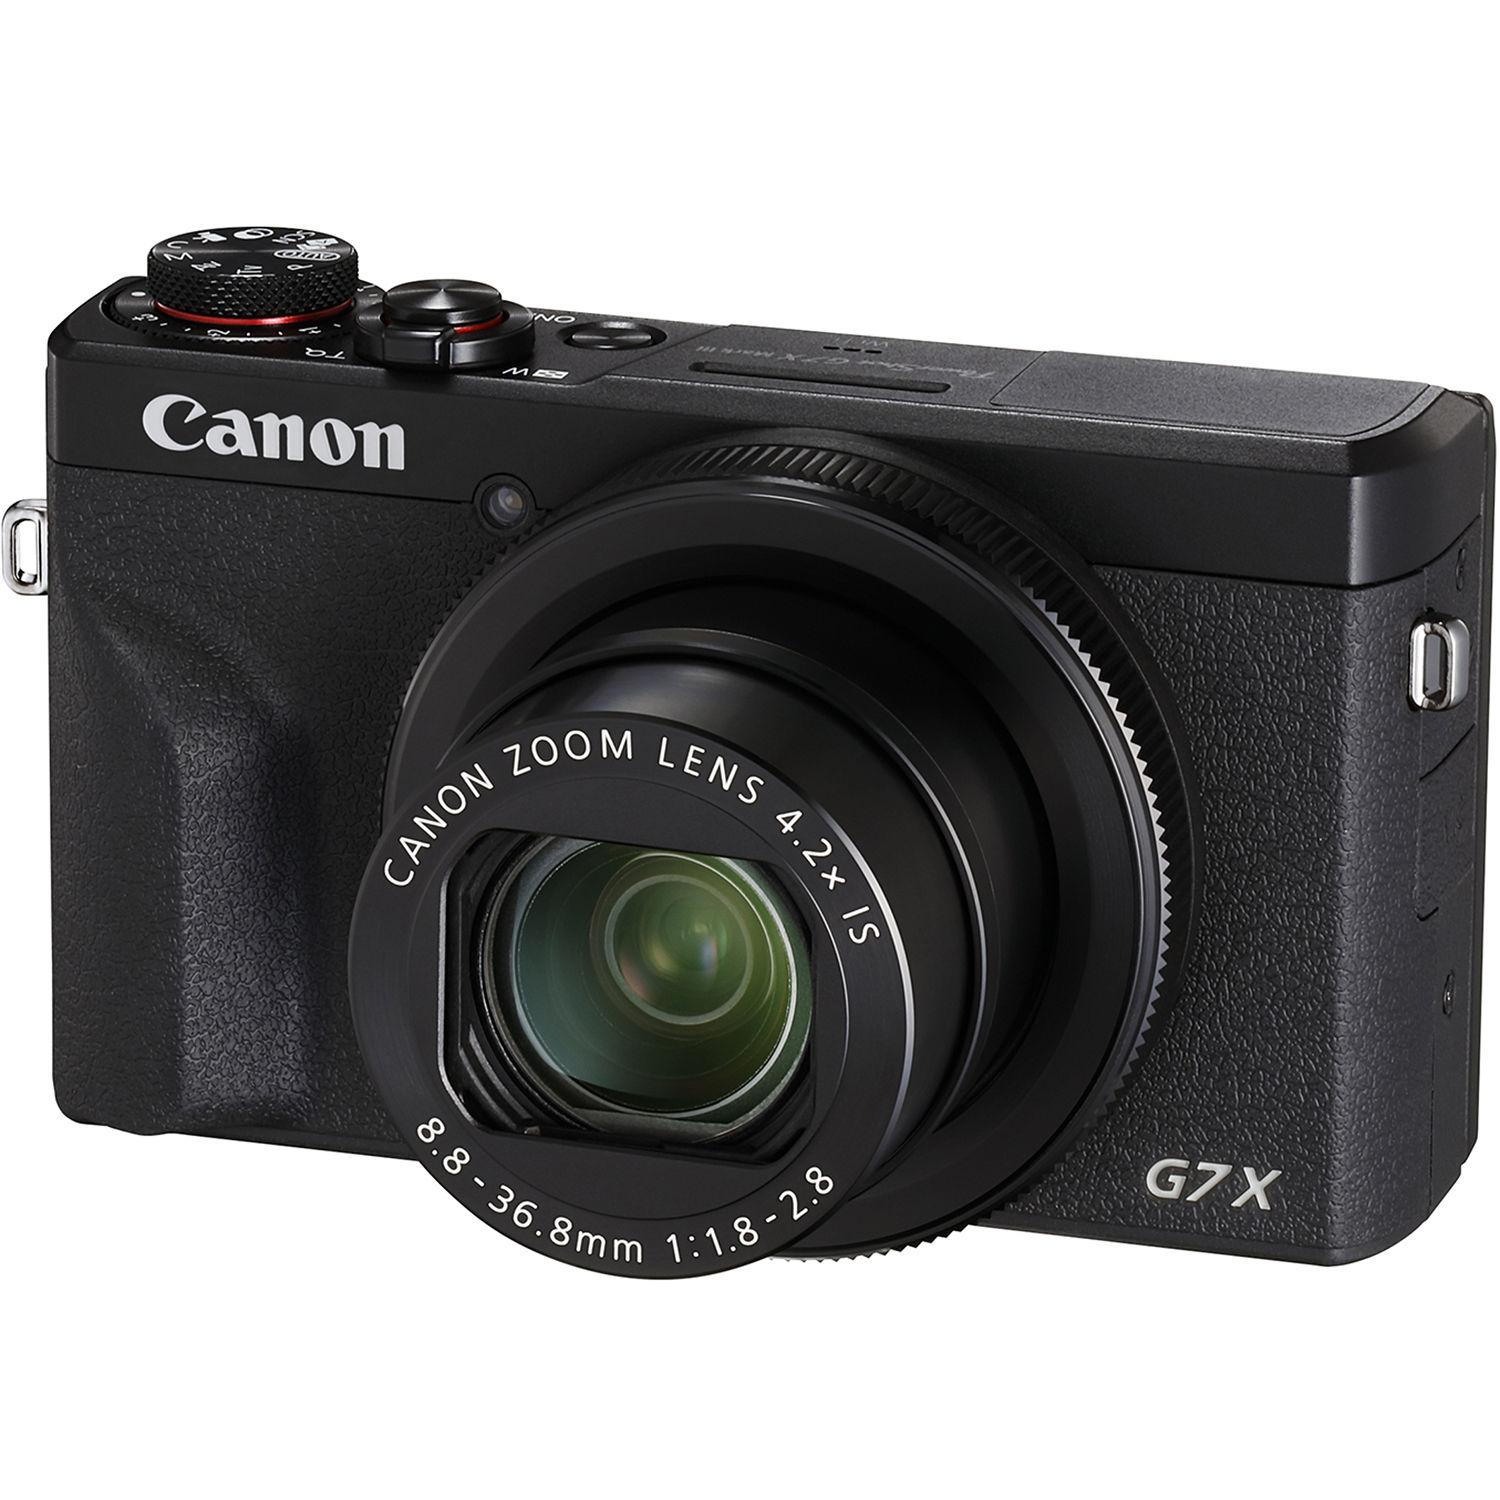 Canon PowerShot G7X Mark III Digital Camera for $449 Shipped